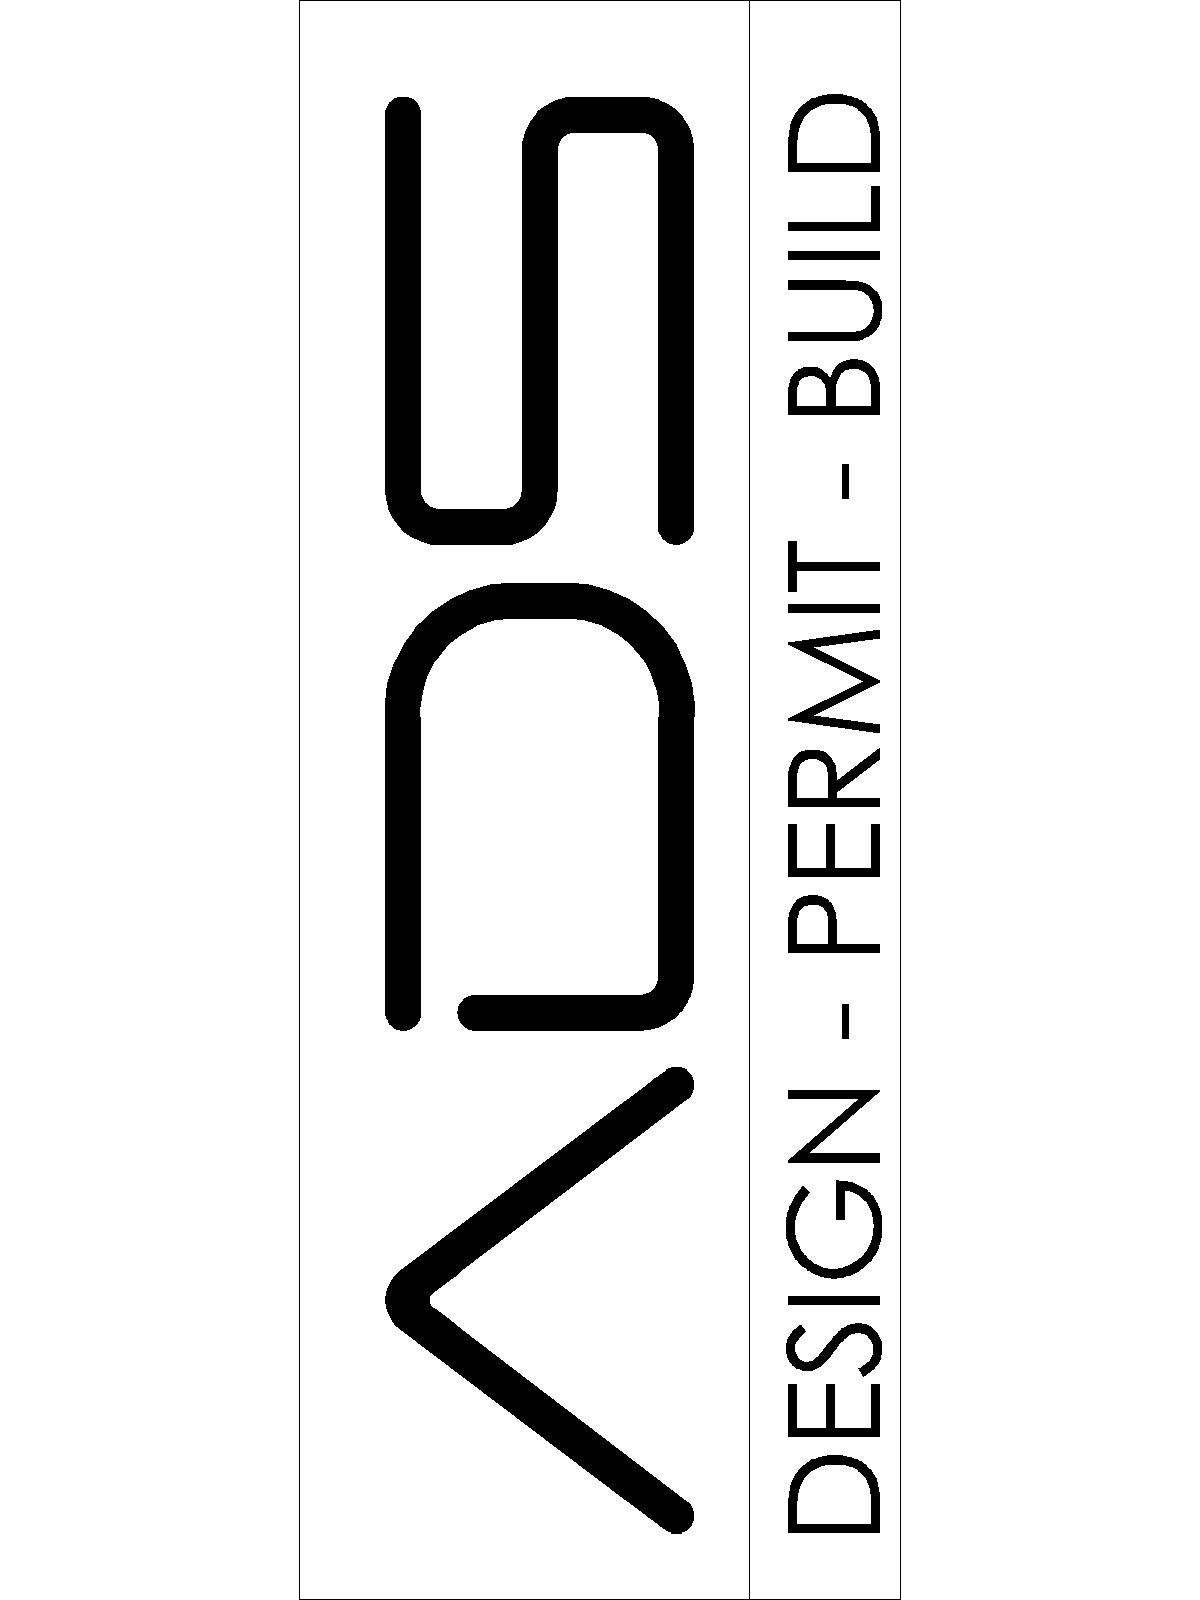 ADS Logo